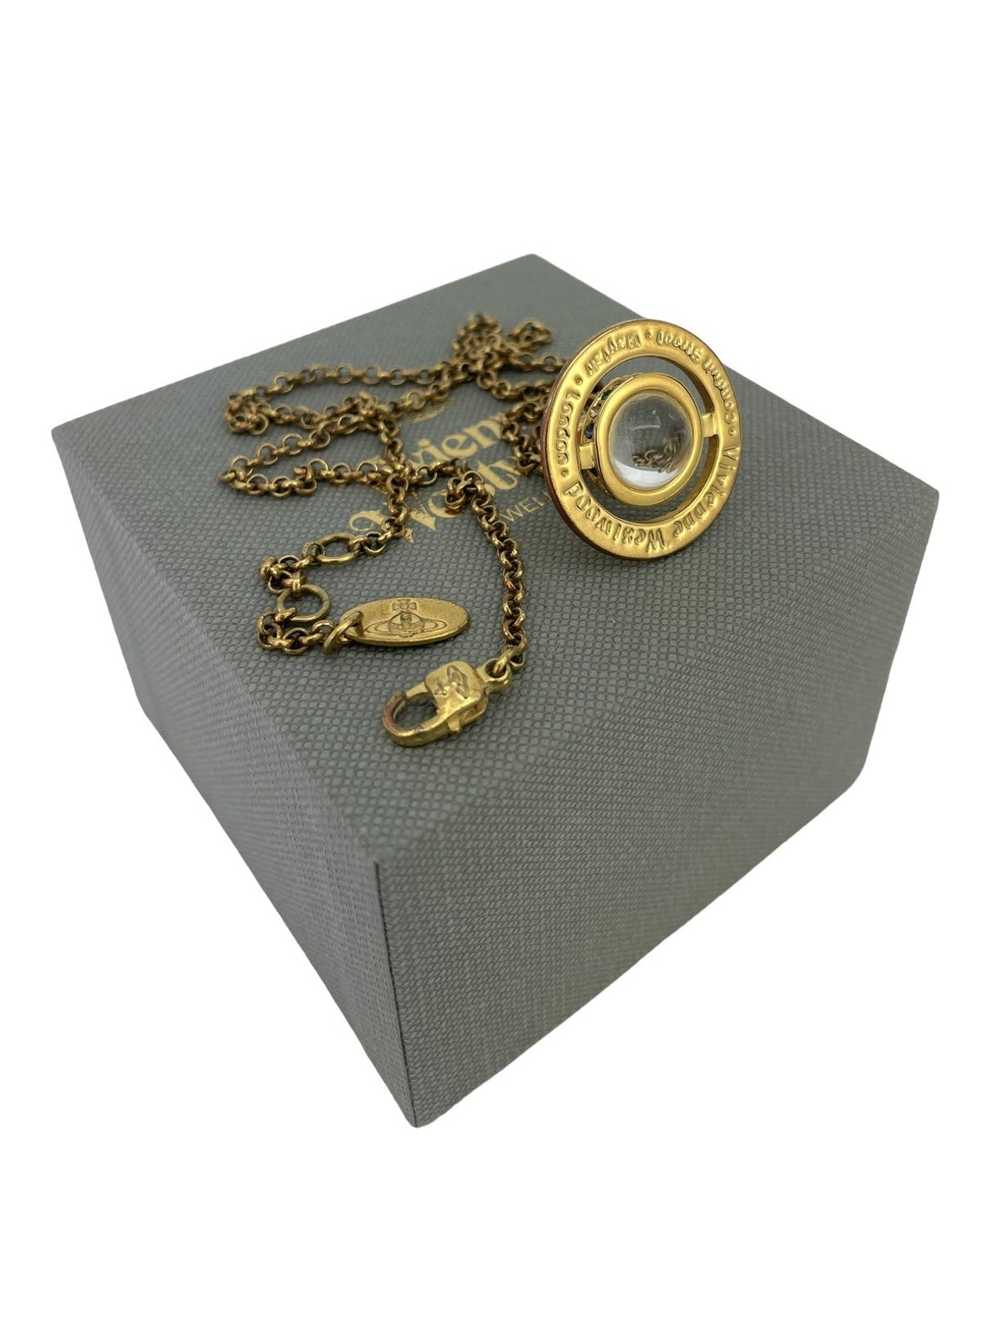 Vivienne Westwood Gold 3D Orb Necklace - image 3